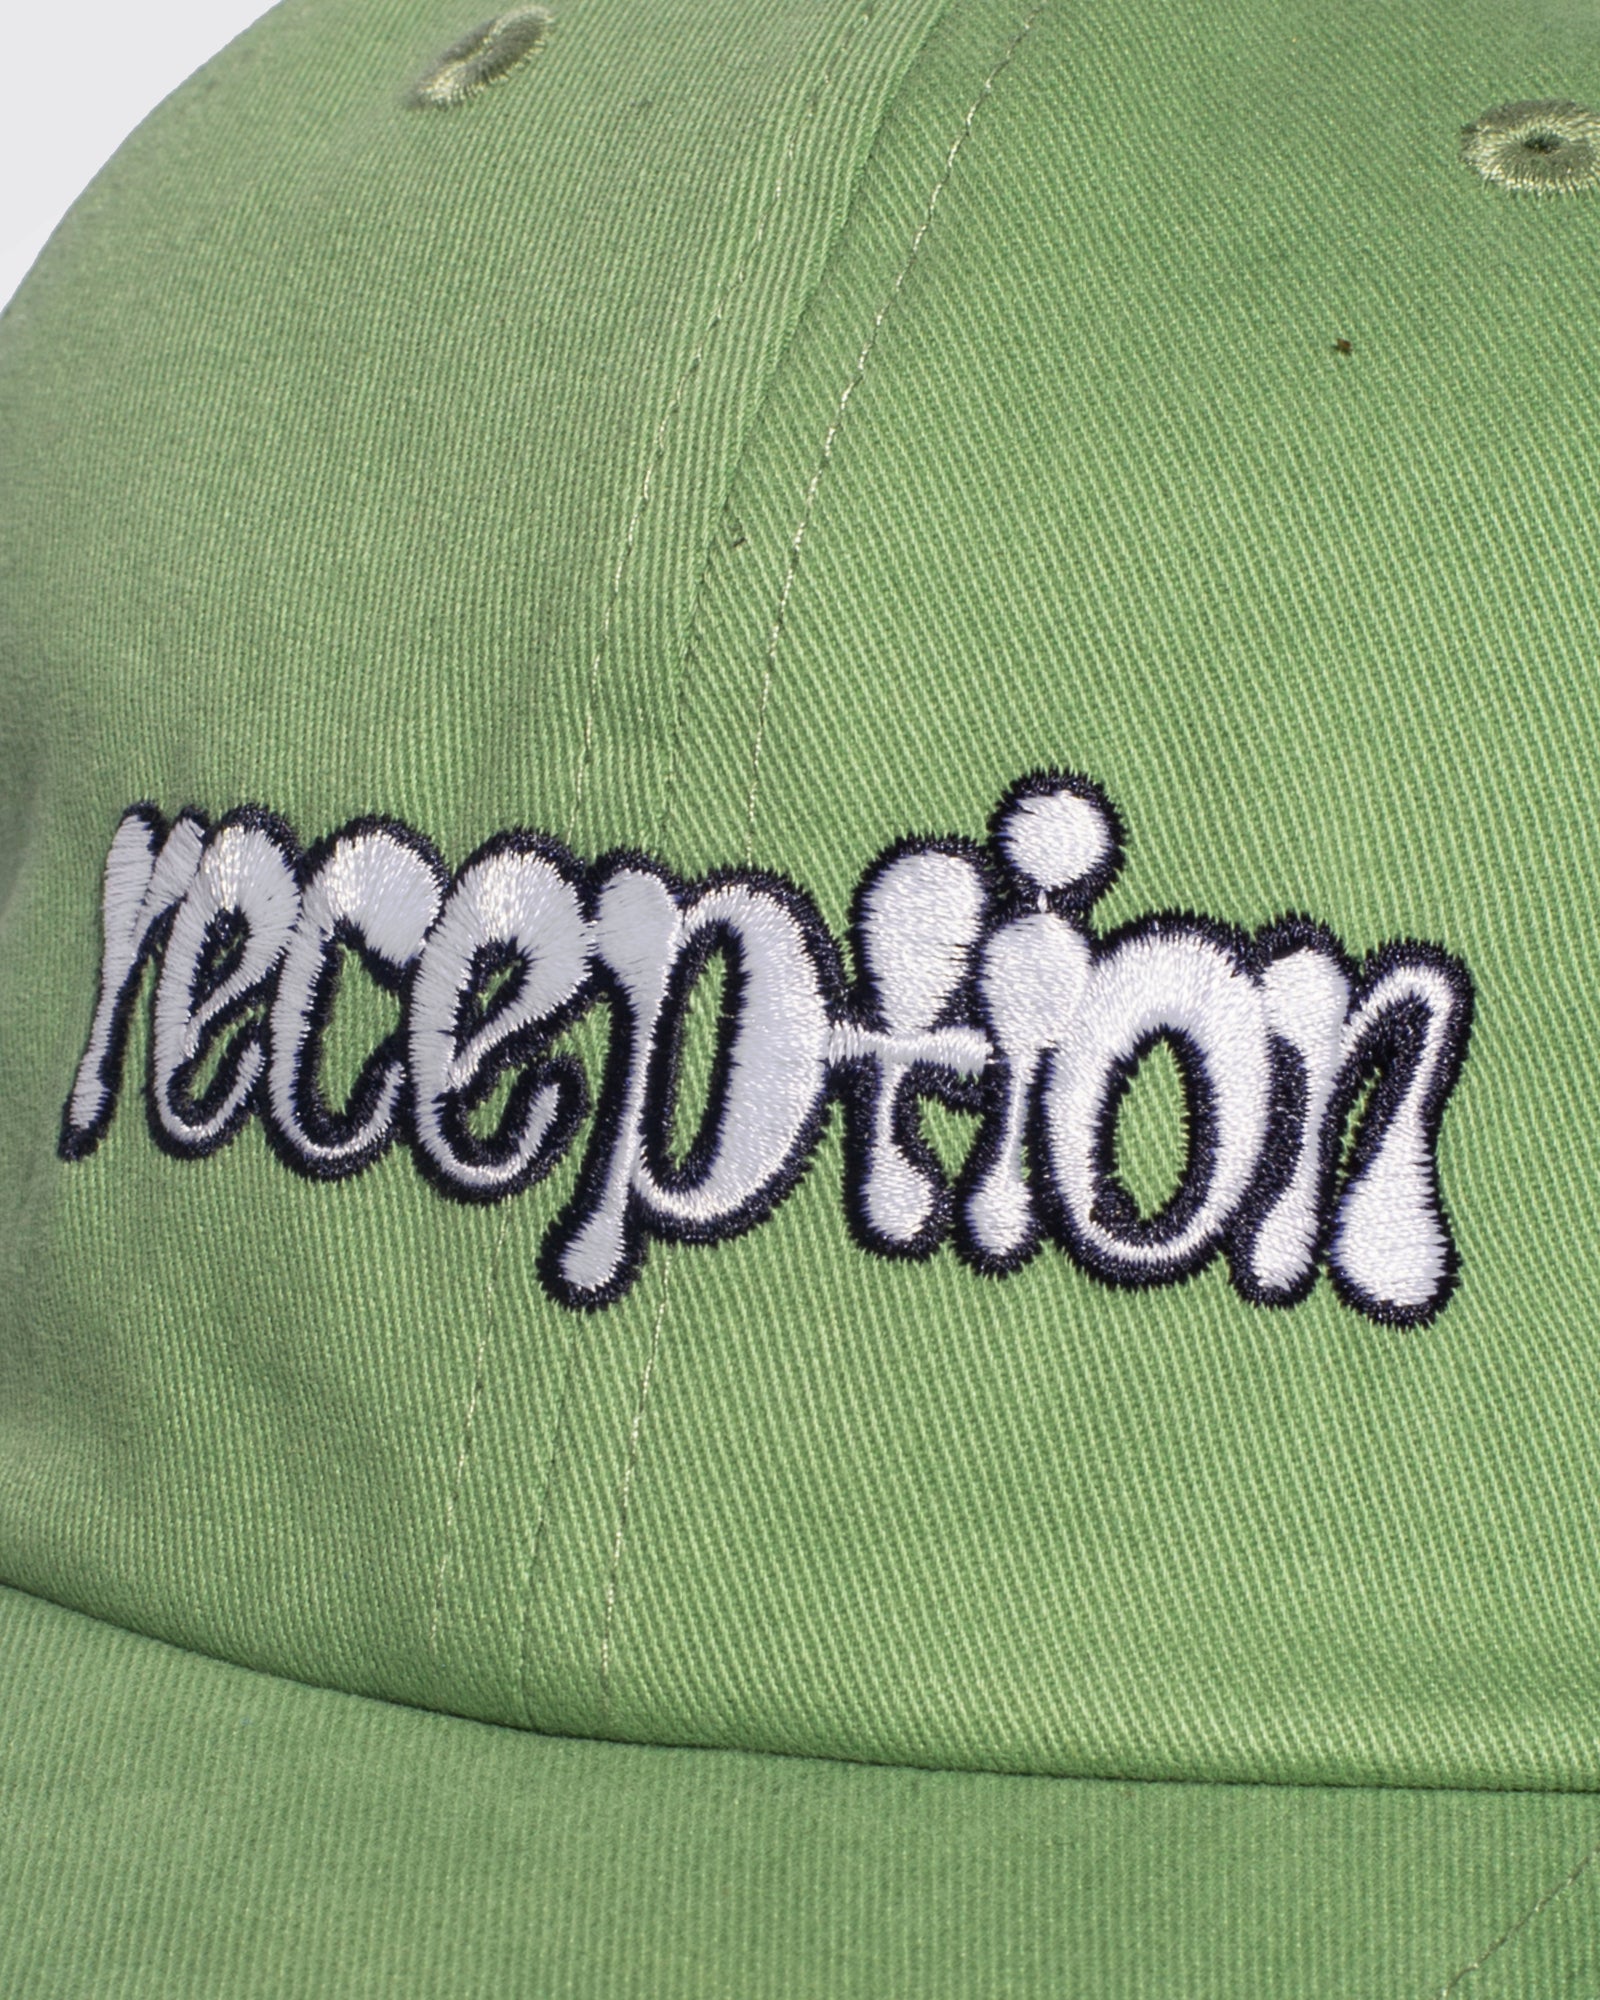 Reception - Hat - Gimmie - 6 Panel Cap - Smoke Green